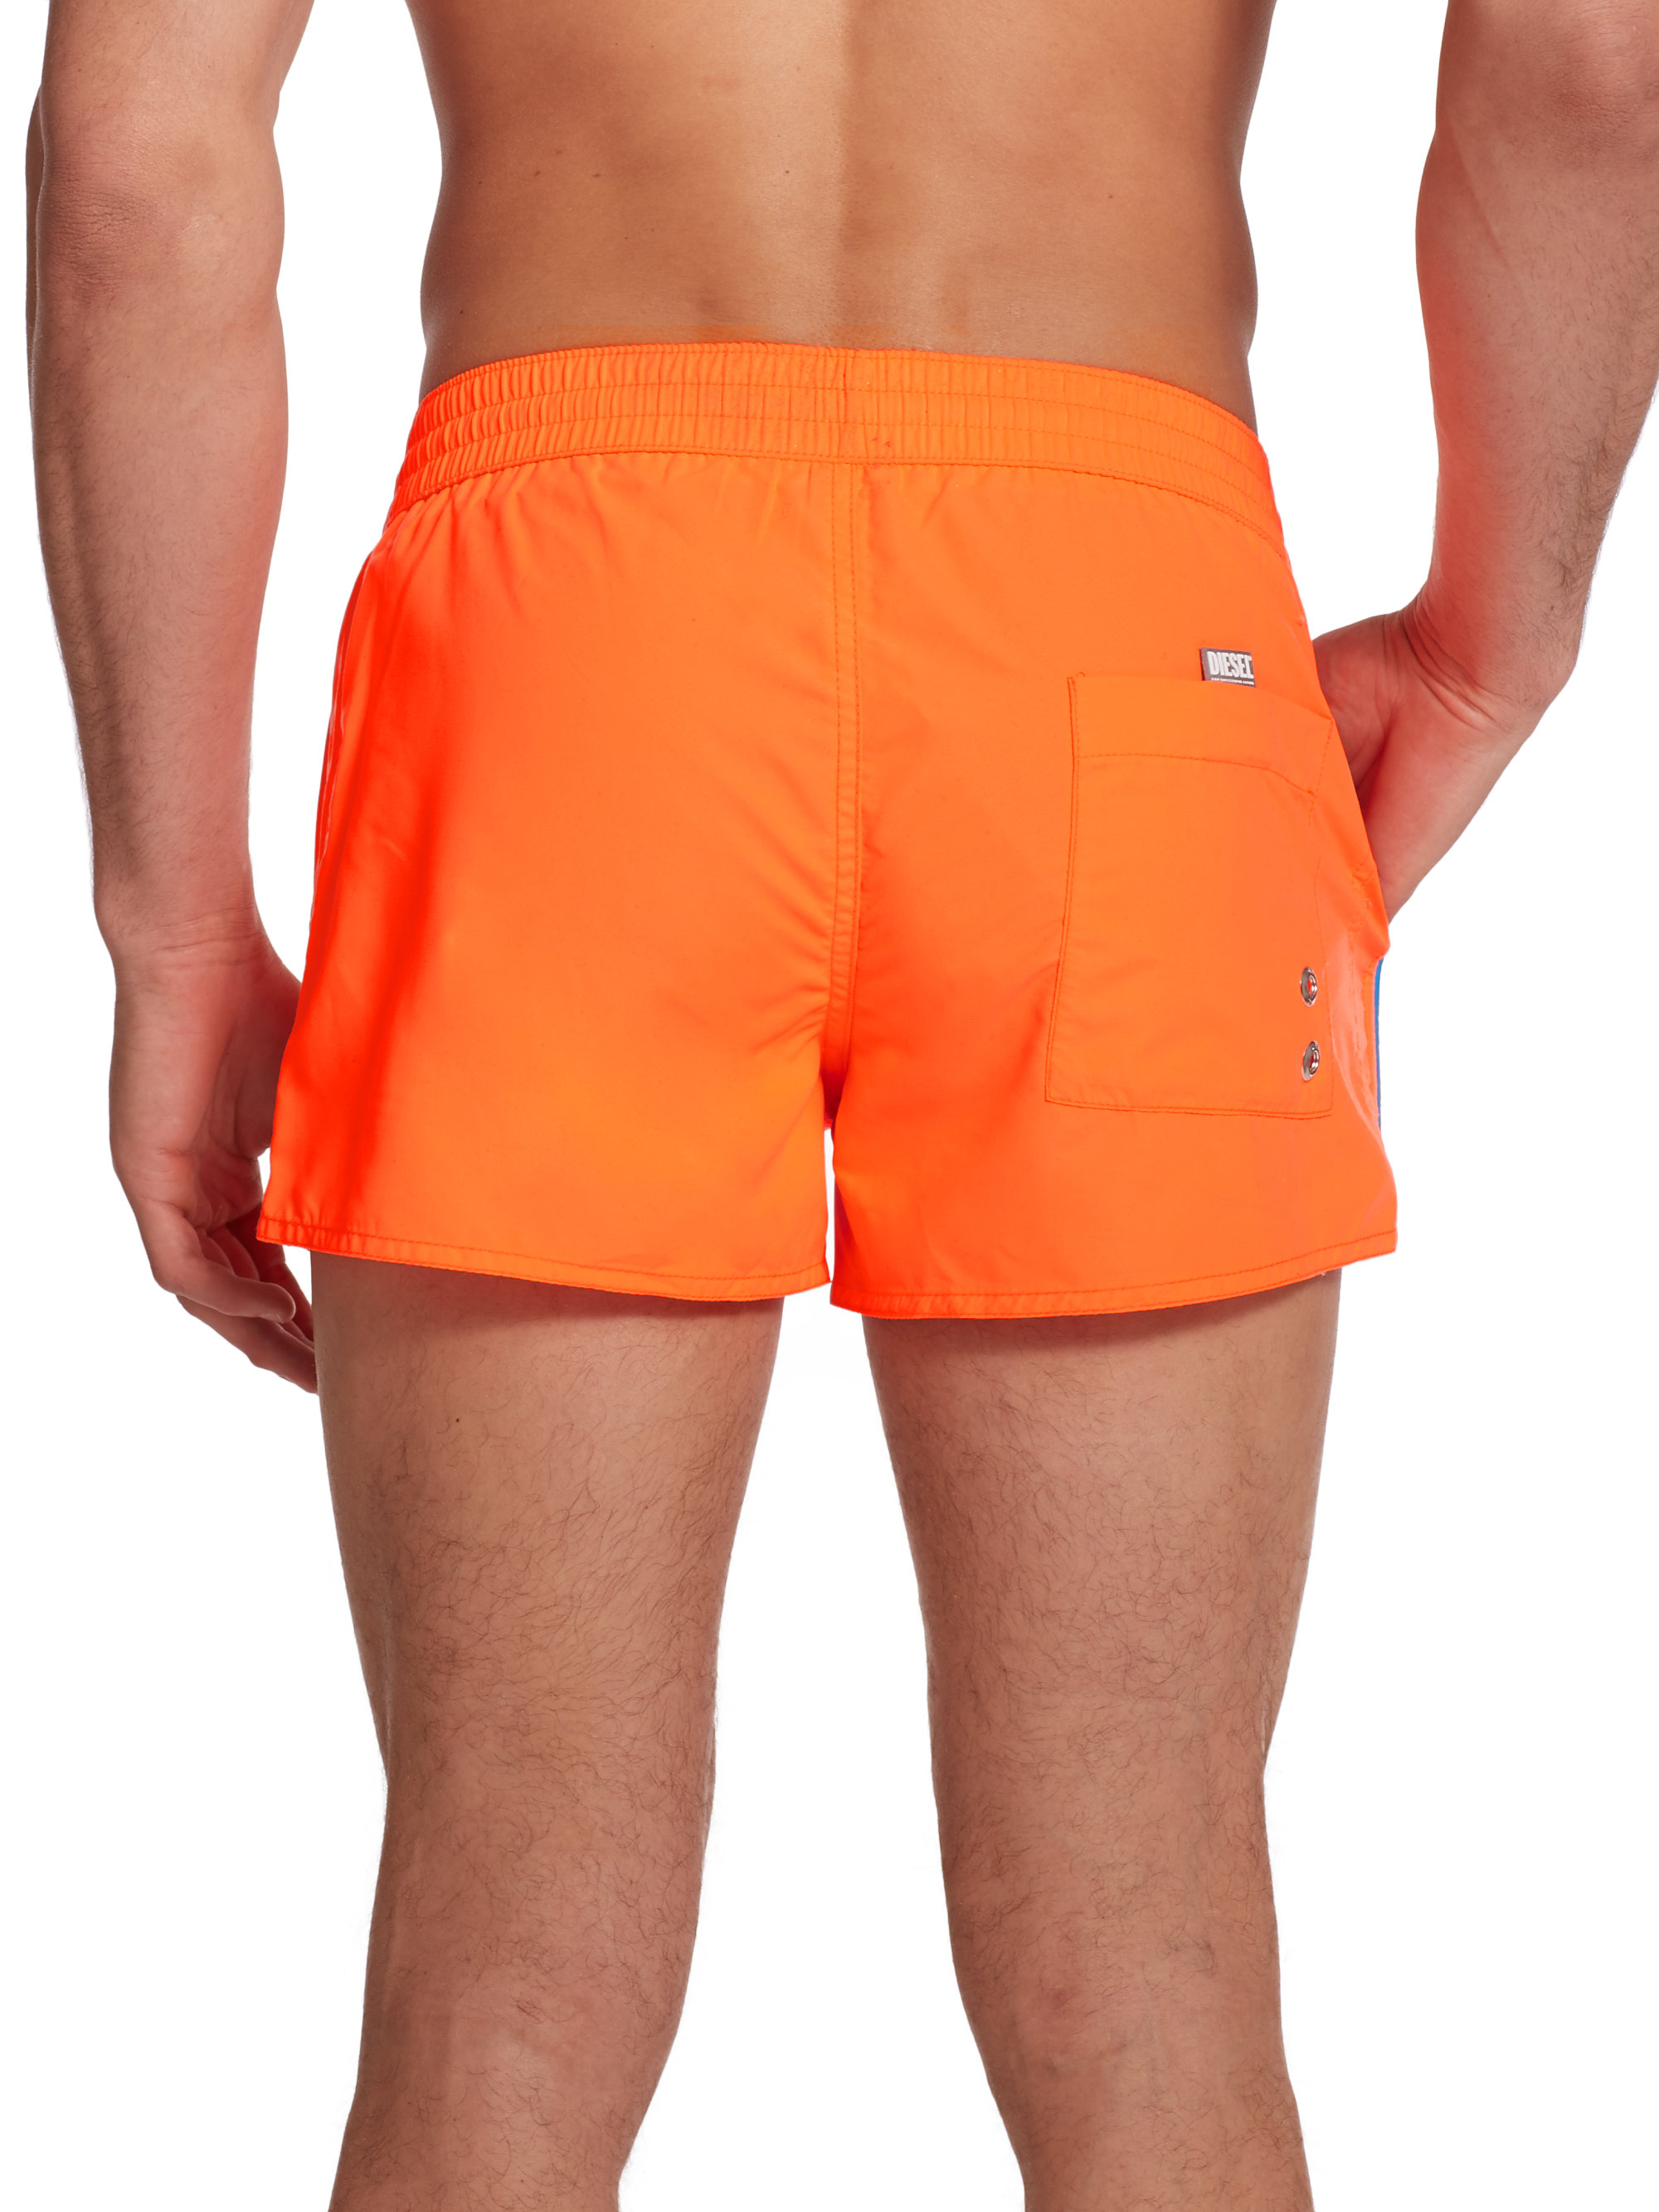 DIESEL Synthetic Coral Rif Swim Shorts in Orange for Men - Lyst